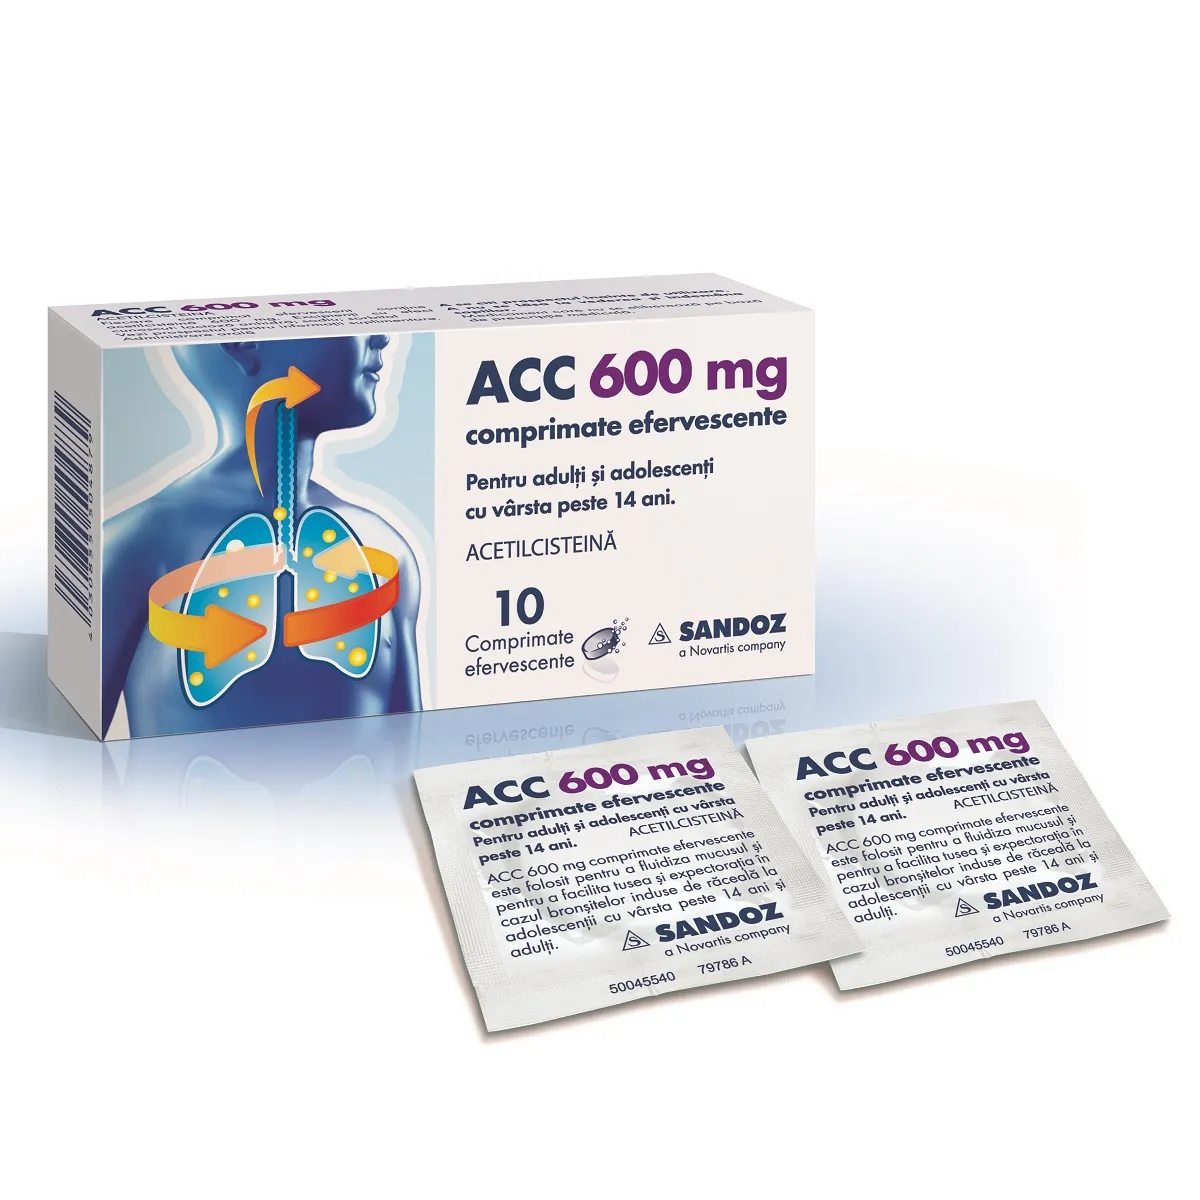 ACC 600 mg, 10 comprimate efervescente individuale, Sandoz